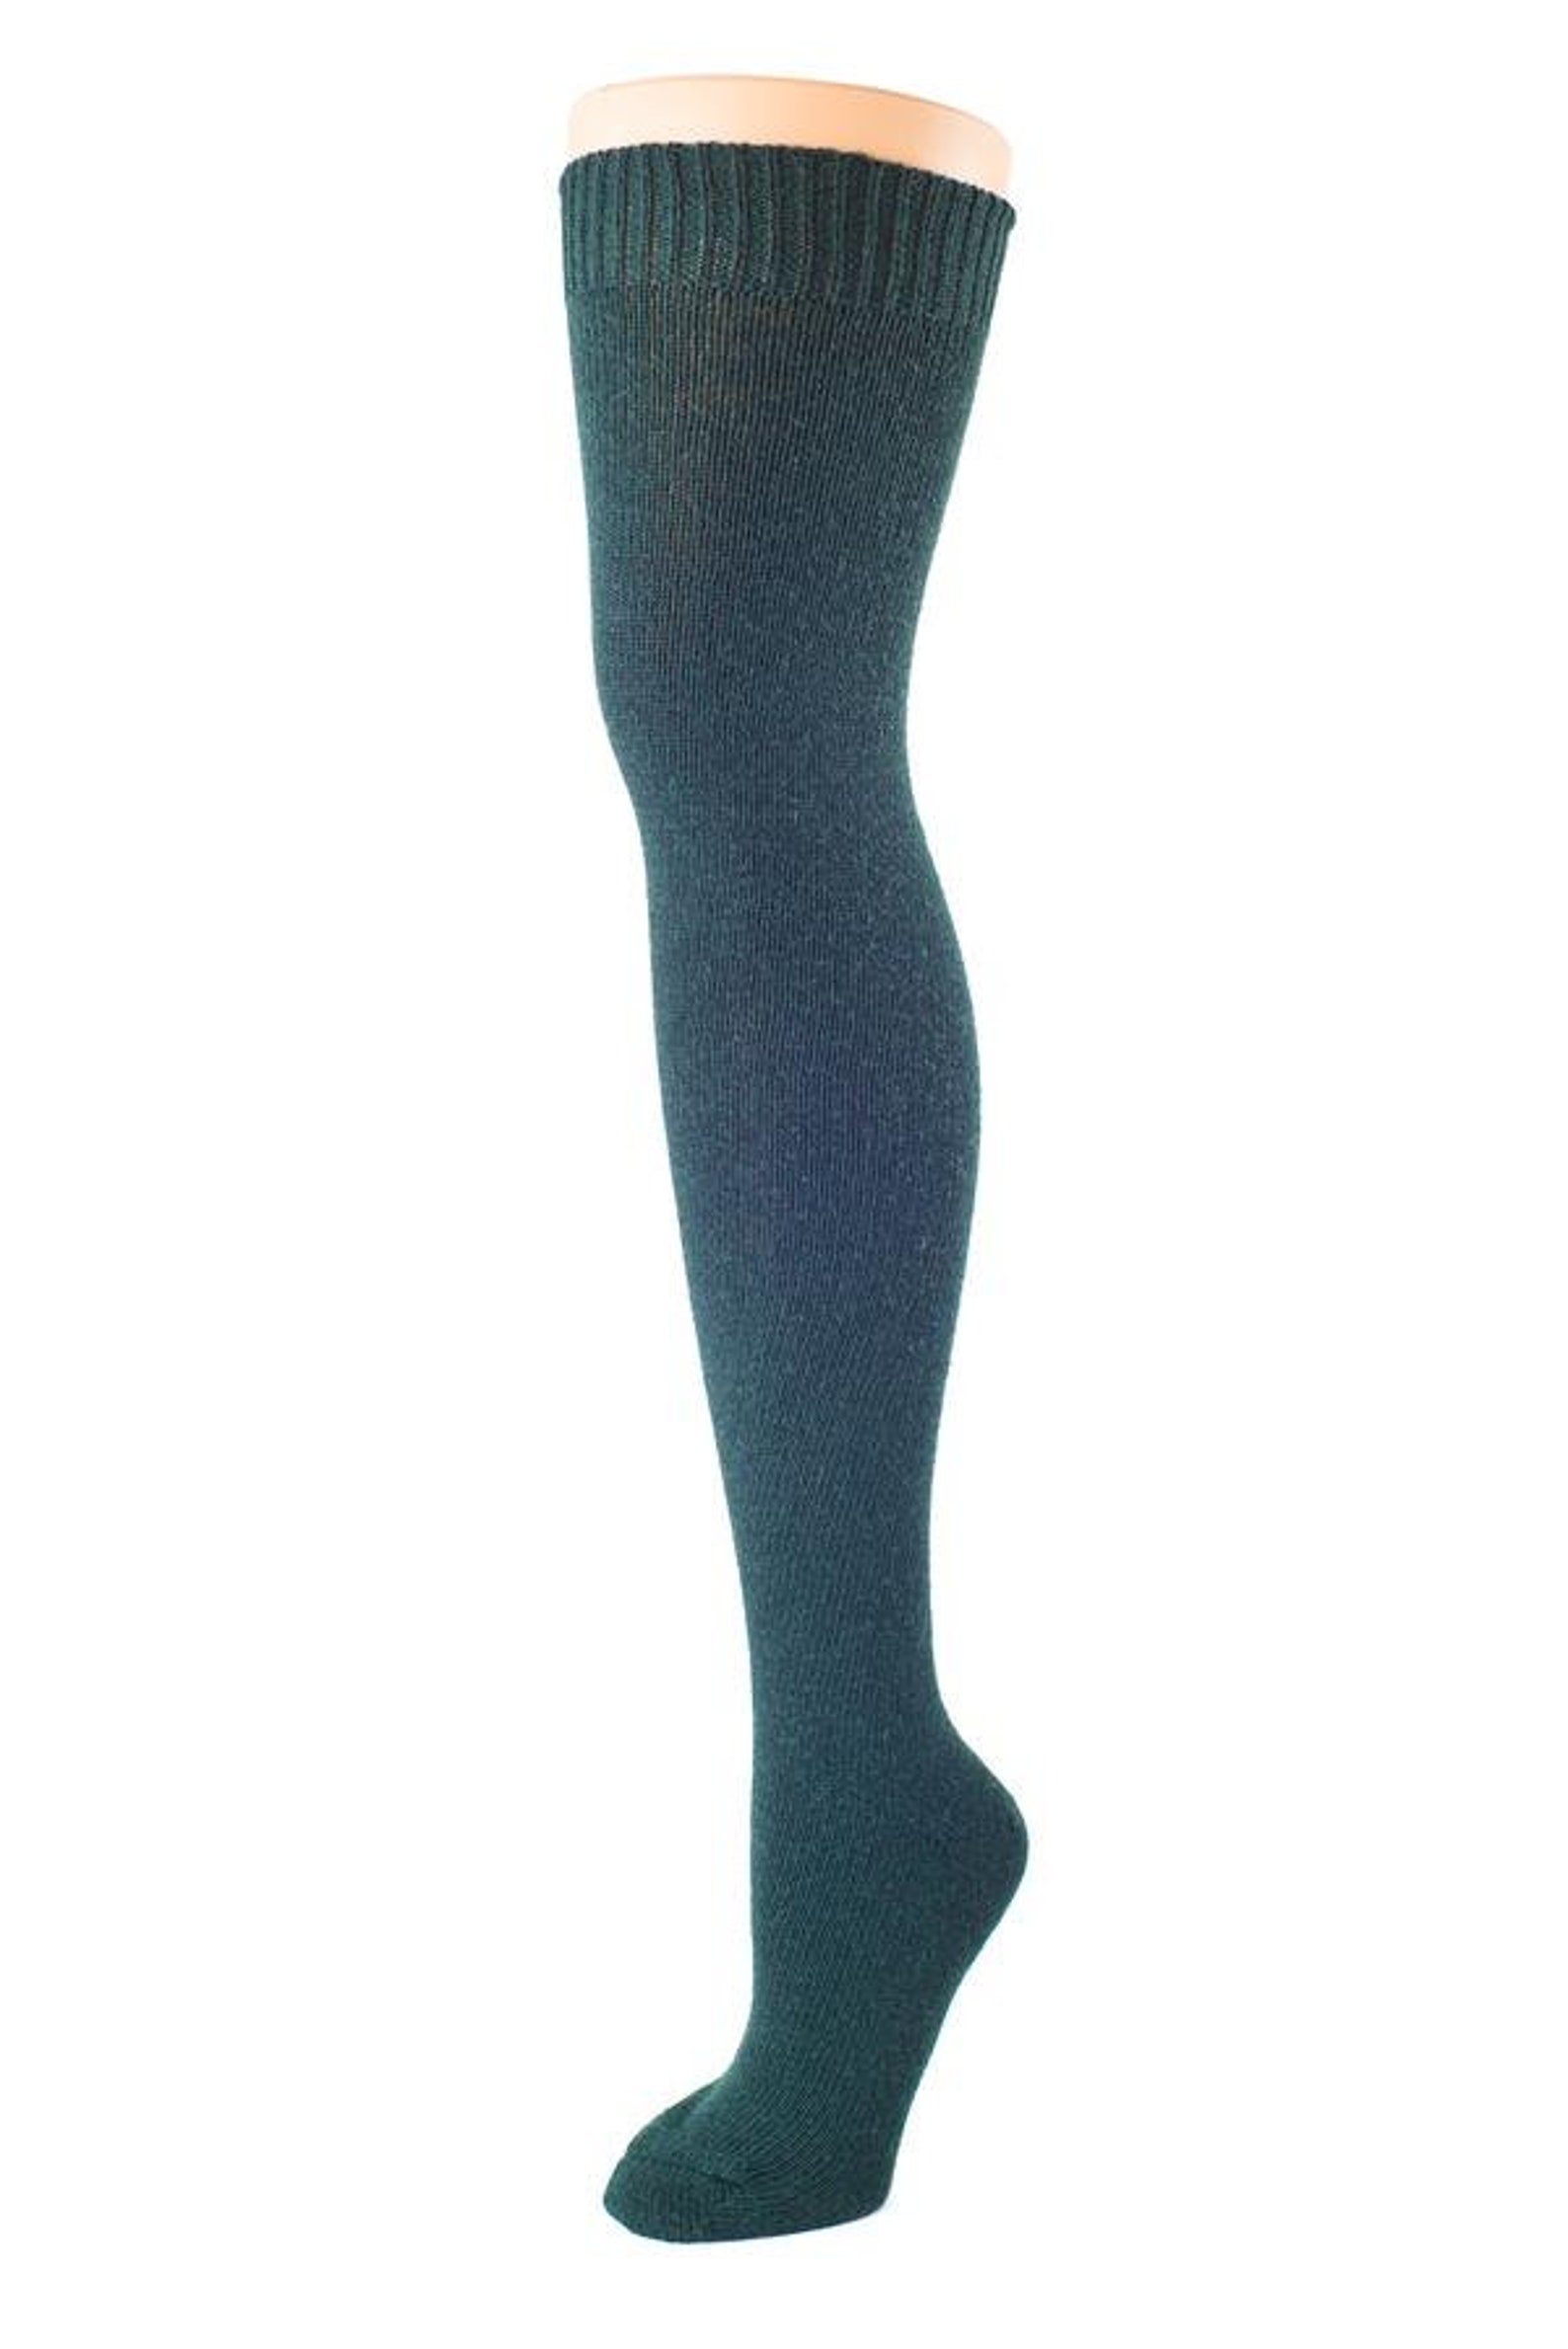 Merino Wool Stockings Wool Thigh High Socks Etsy